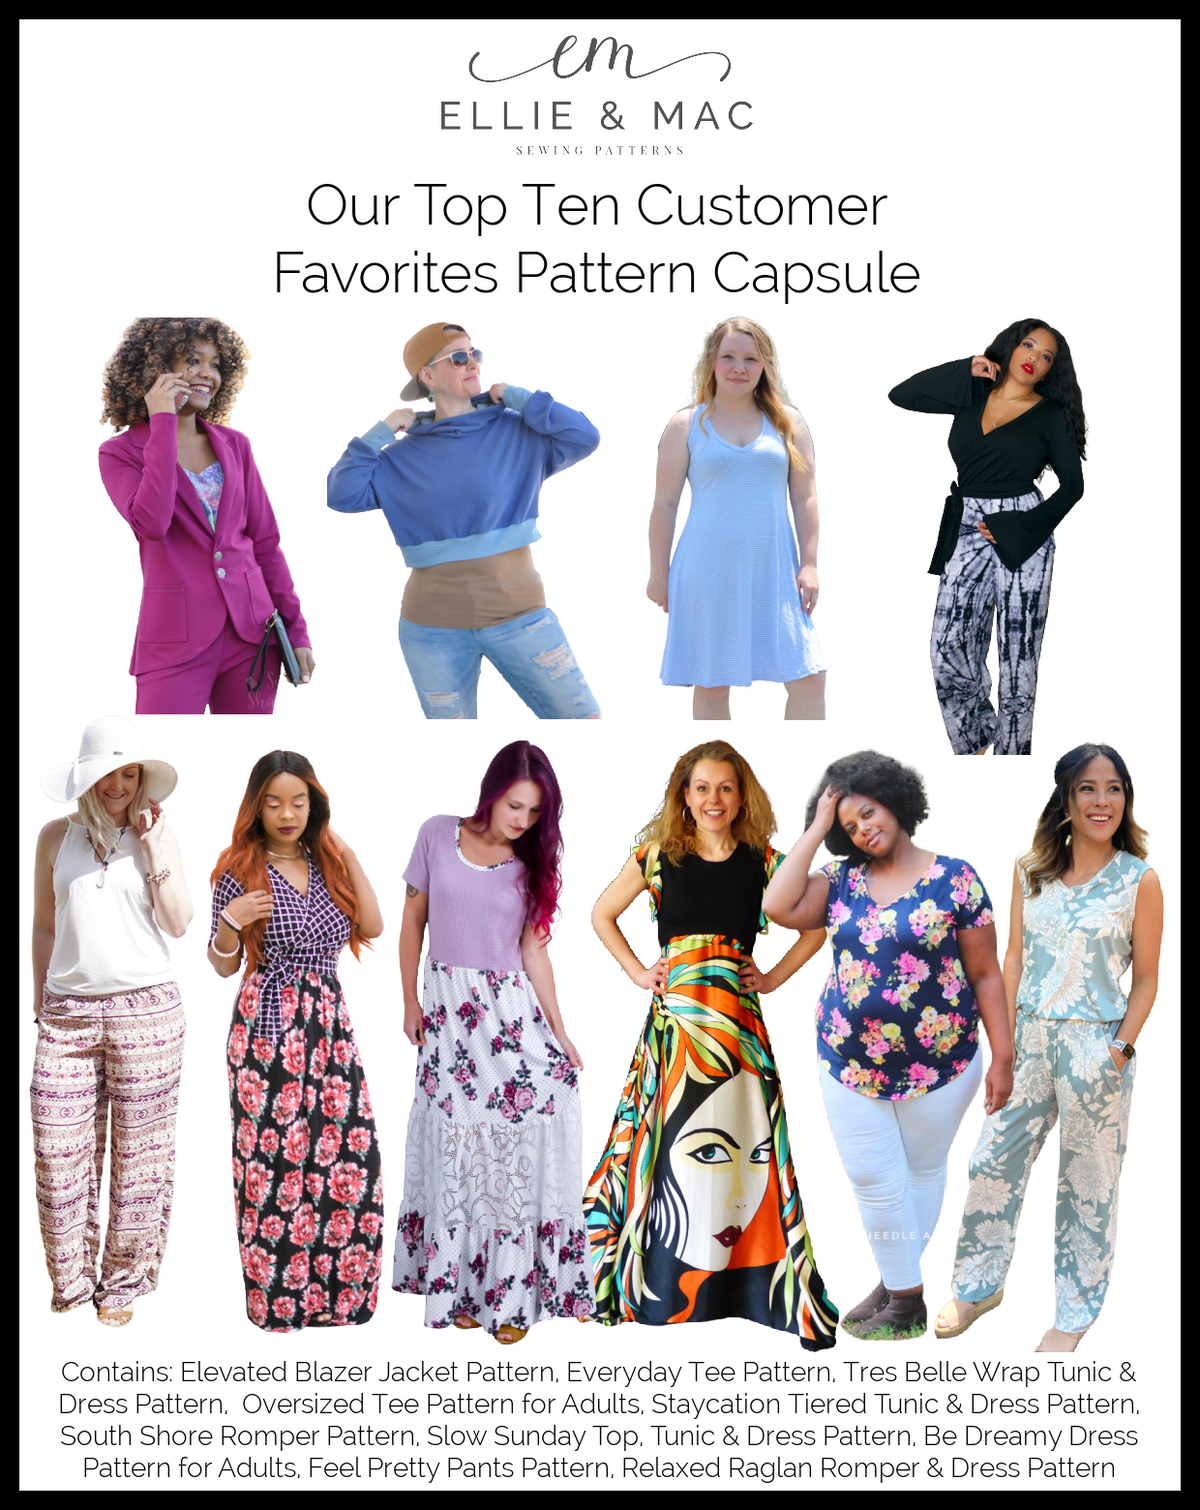 Our Top Ten Customer Favorites Pattern Capsule